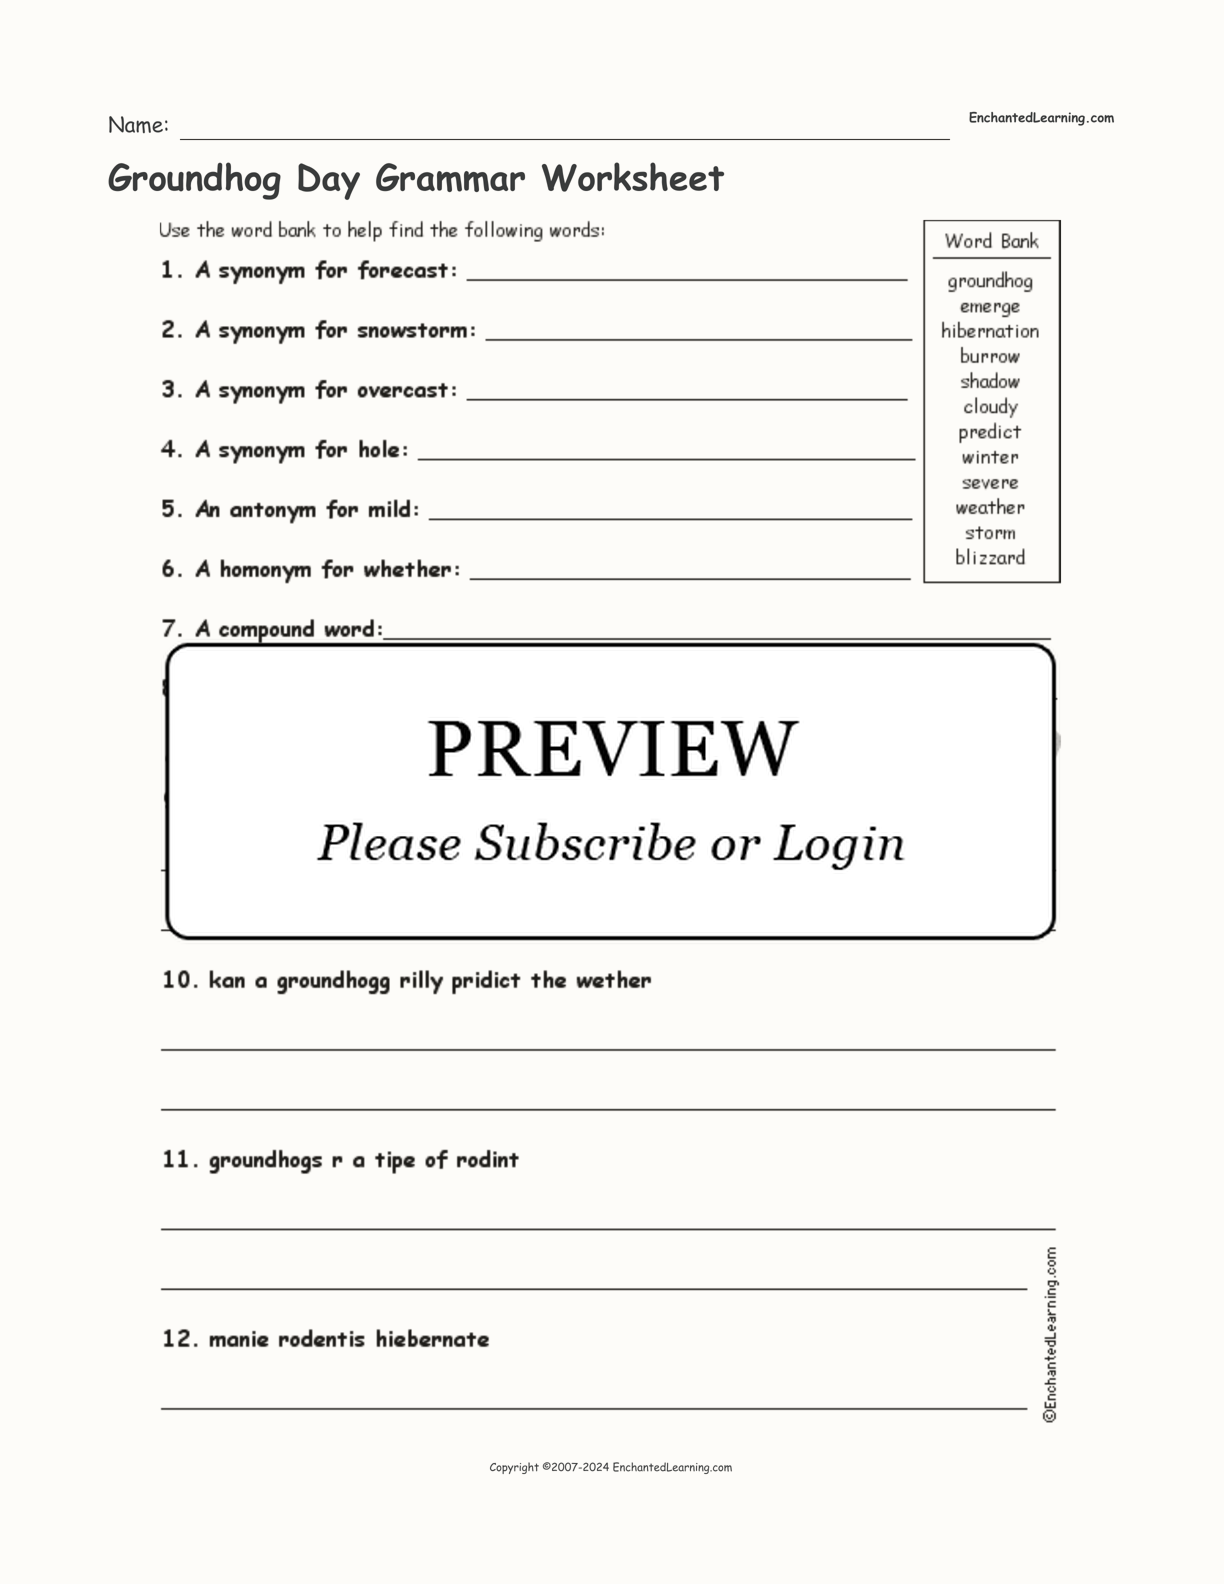 Groundhog Day Grammar Worksheet interactive worksheet page 1